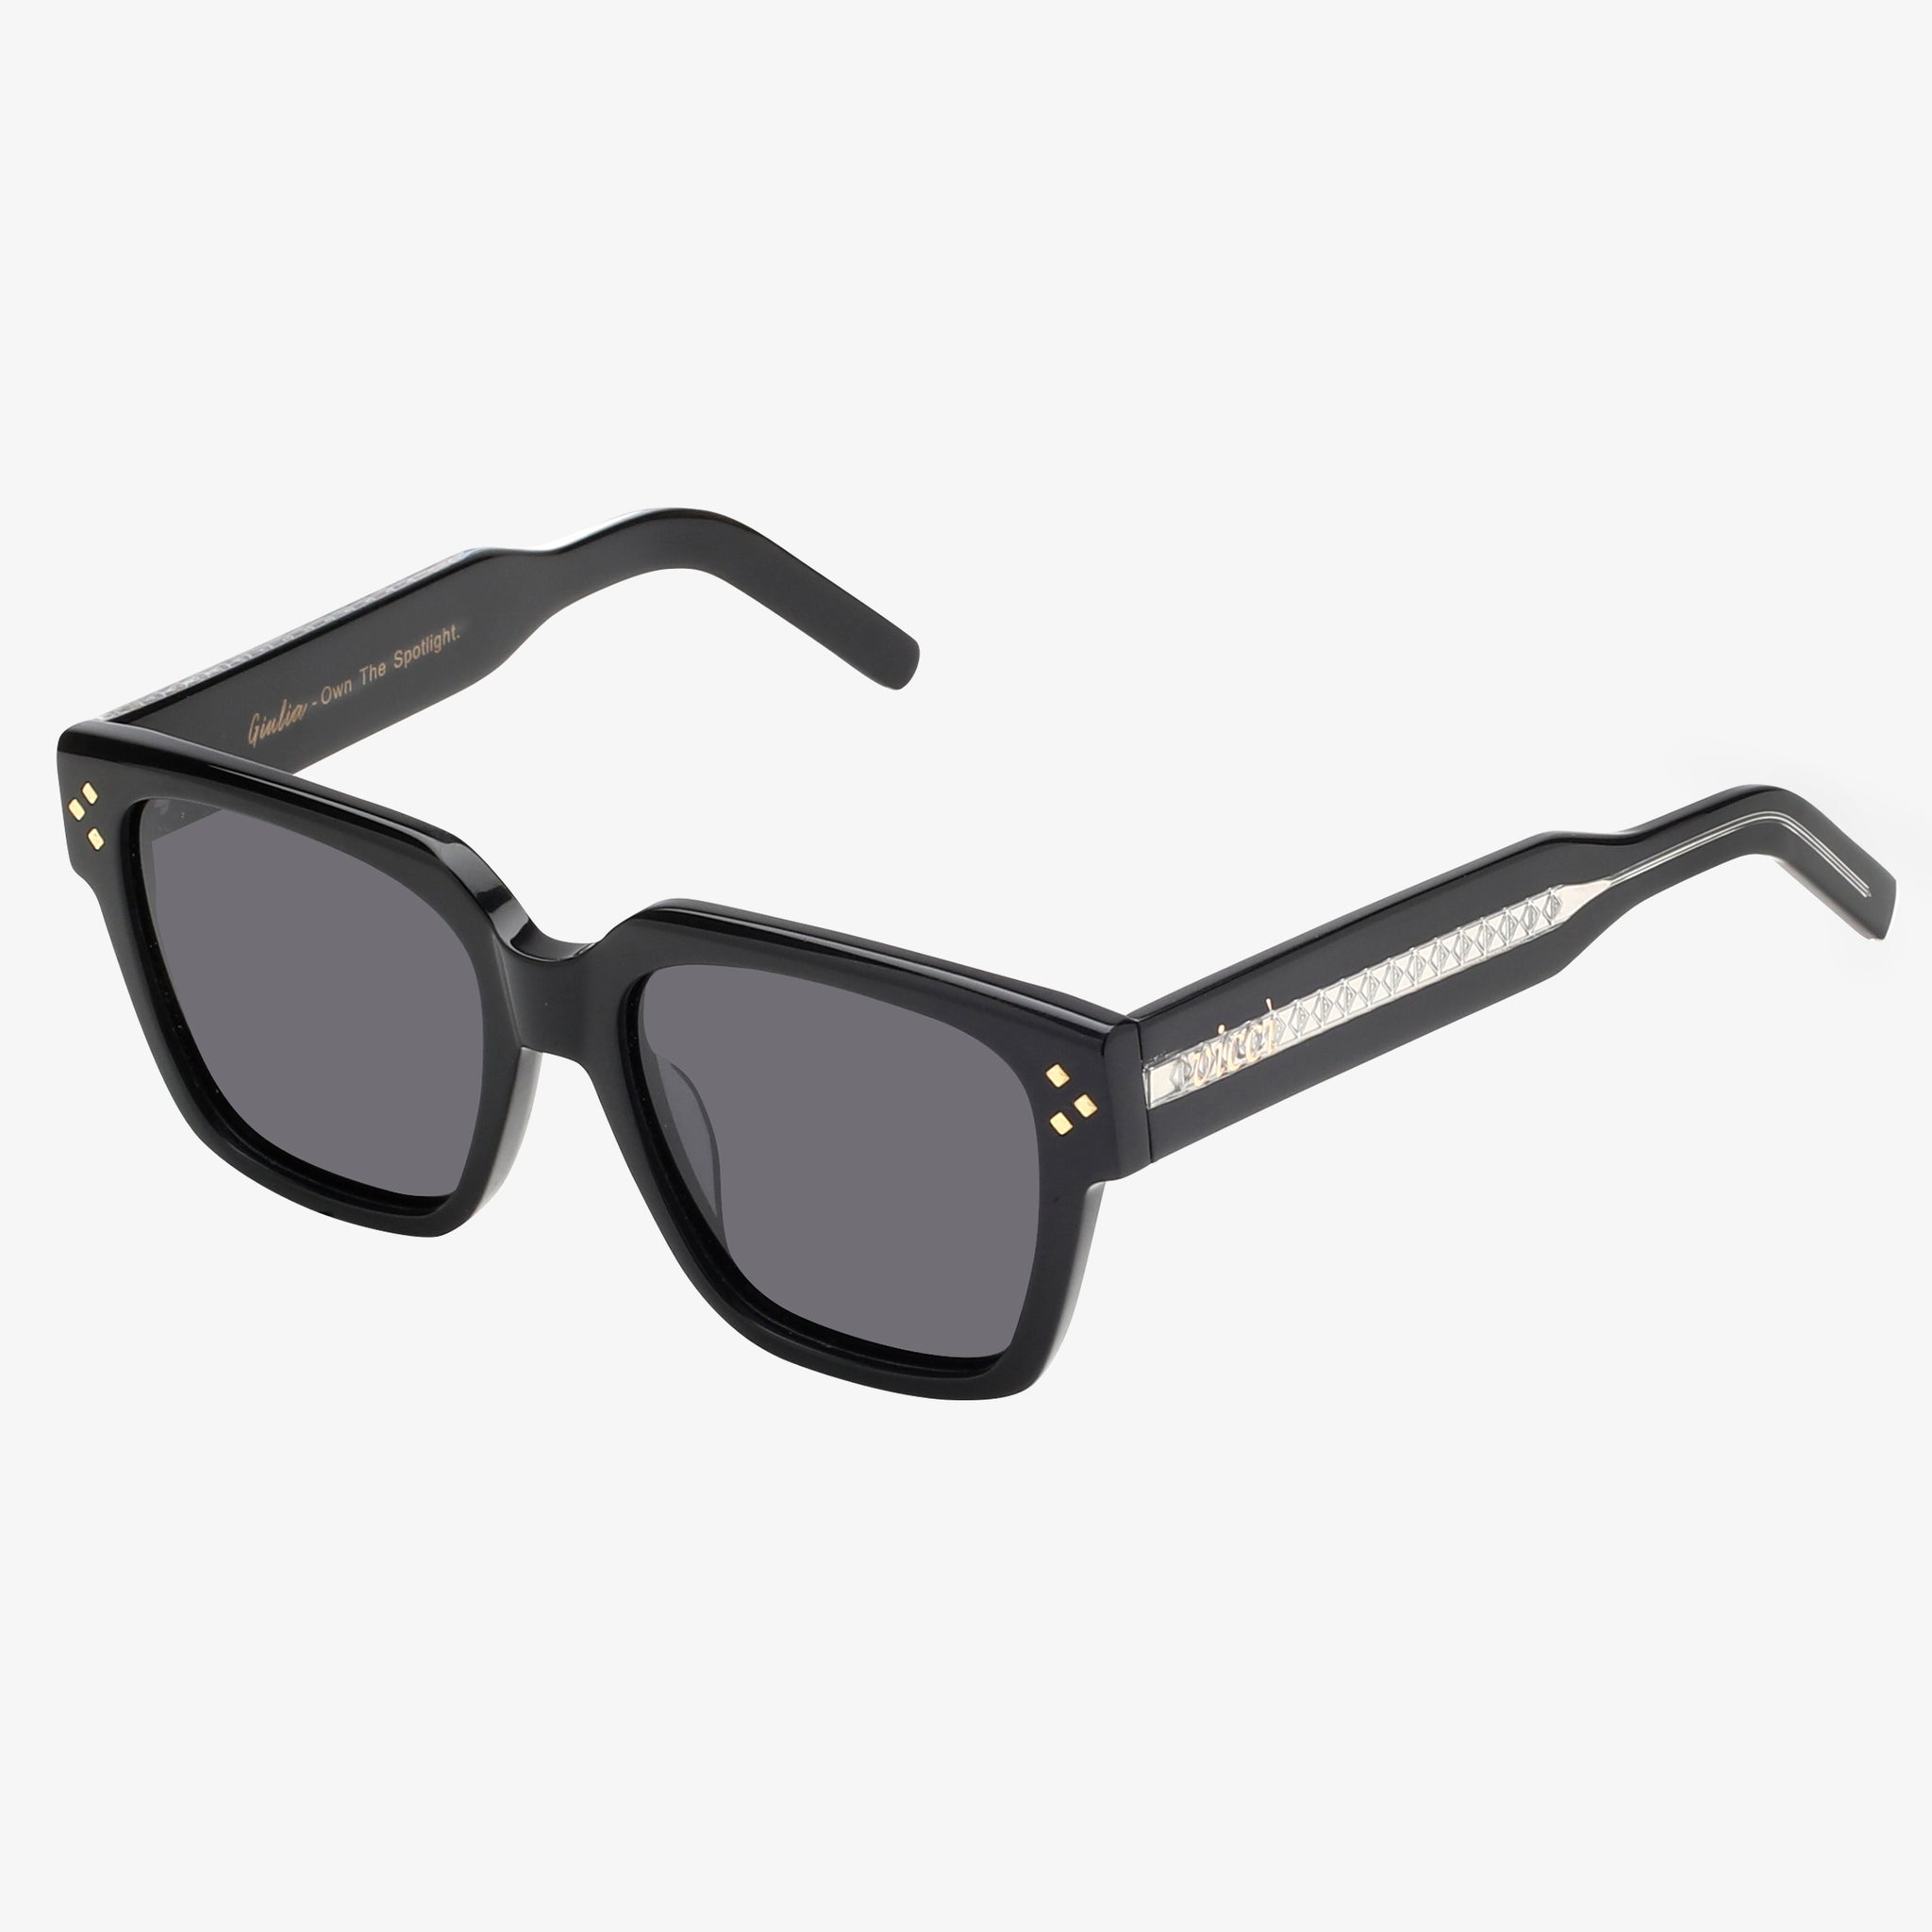 Vicci Eyewear - Buy Optical Glasses and Sunglasses online USA